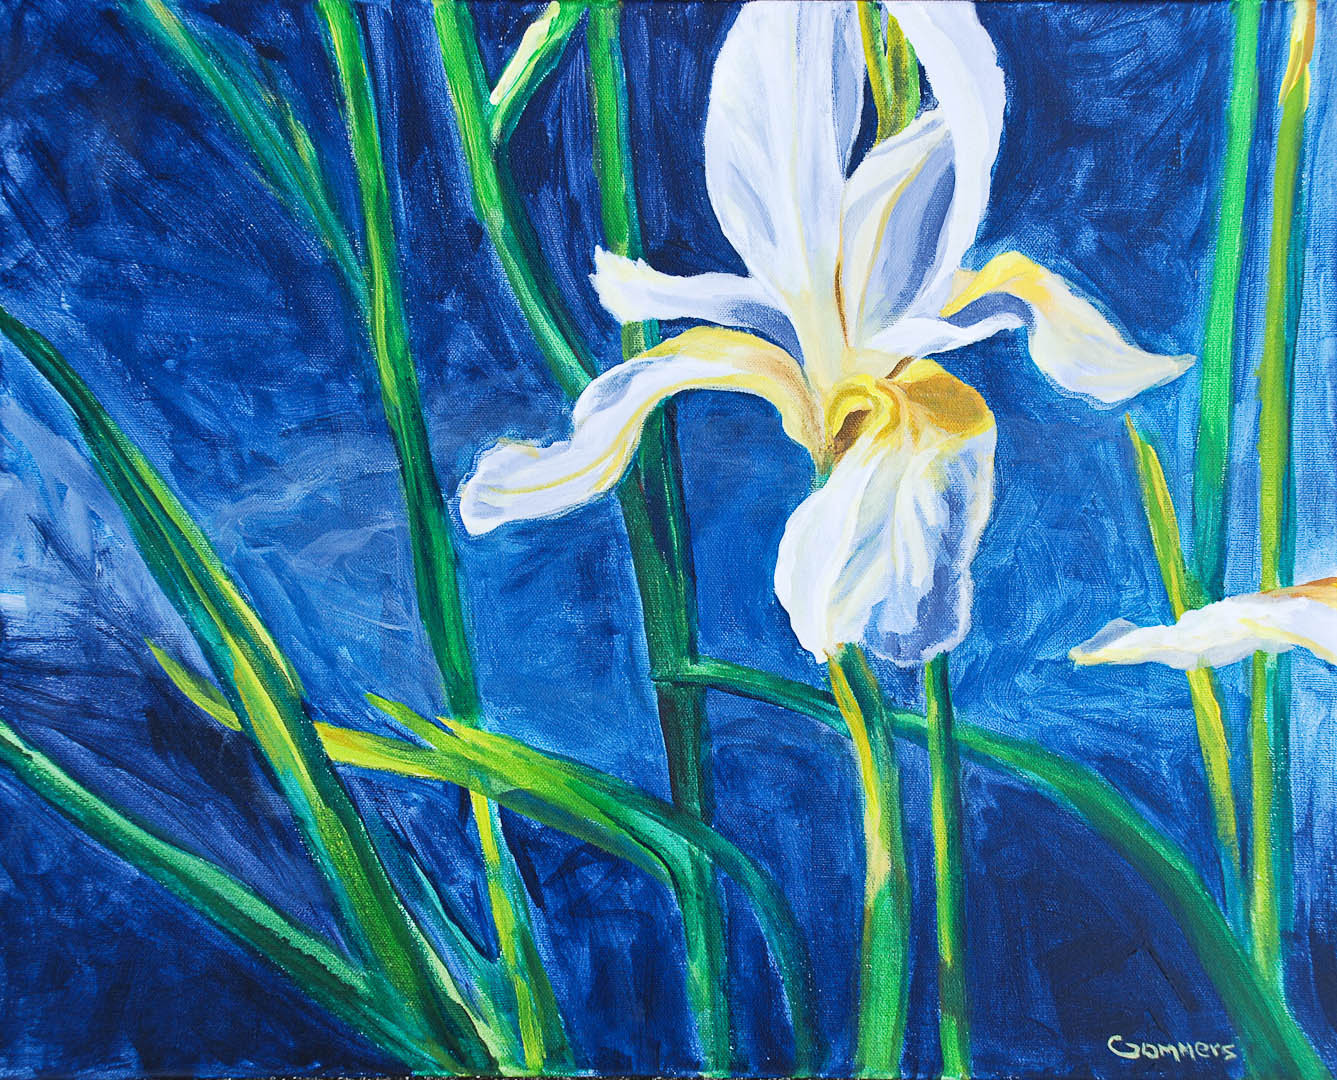 03 Wild Bay Iris, Acrylic on canvas, 16 x 20" $1400